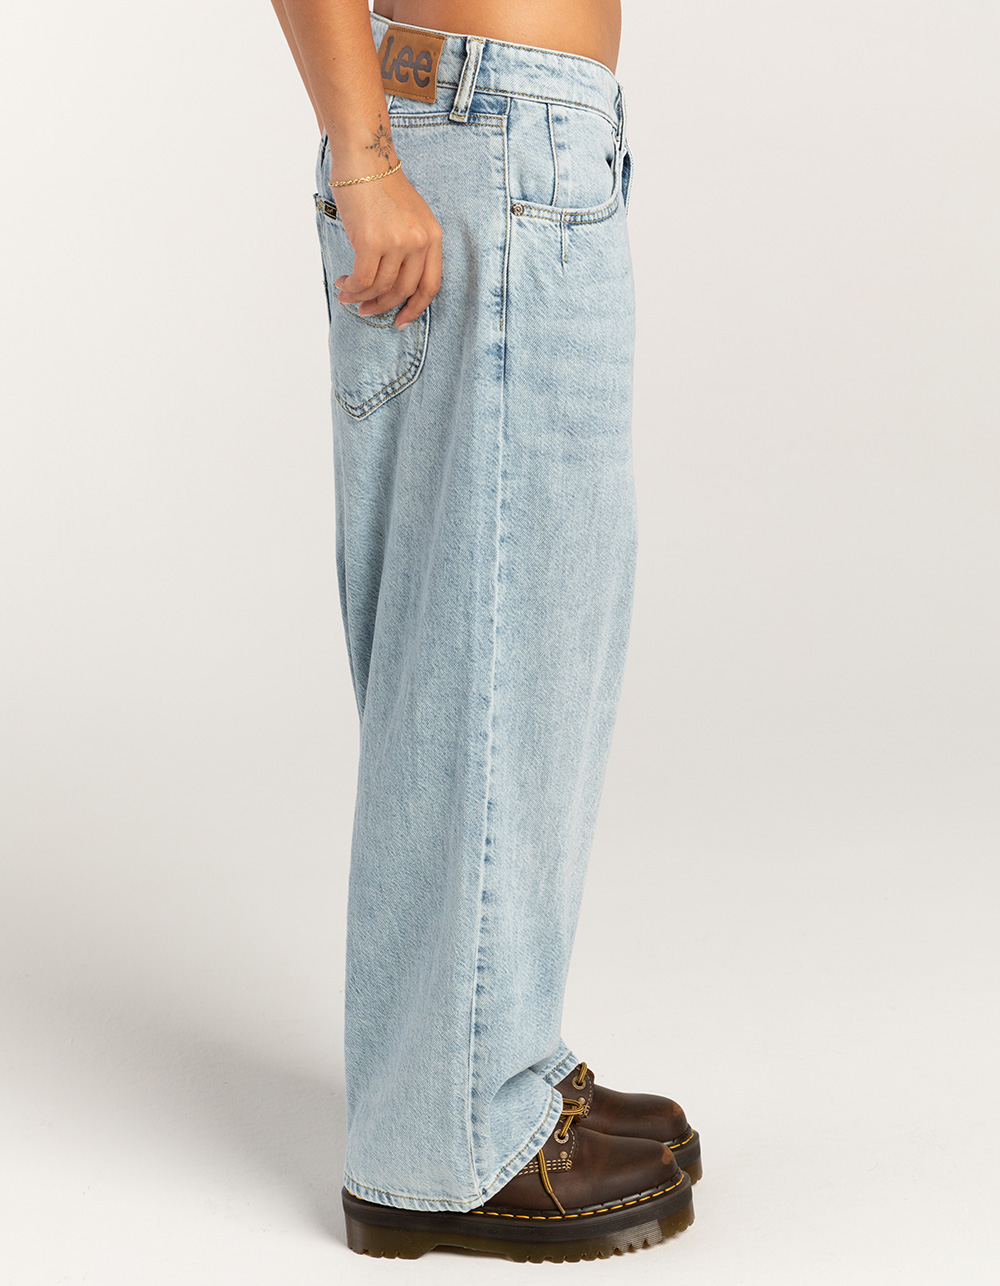 Lee, Jeans, Lee Gold Label Mens Relaxed Fit Jeans Light Blue Denim Cotton  5 Pocket Western